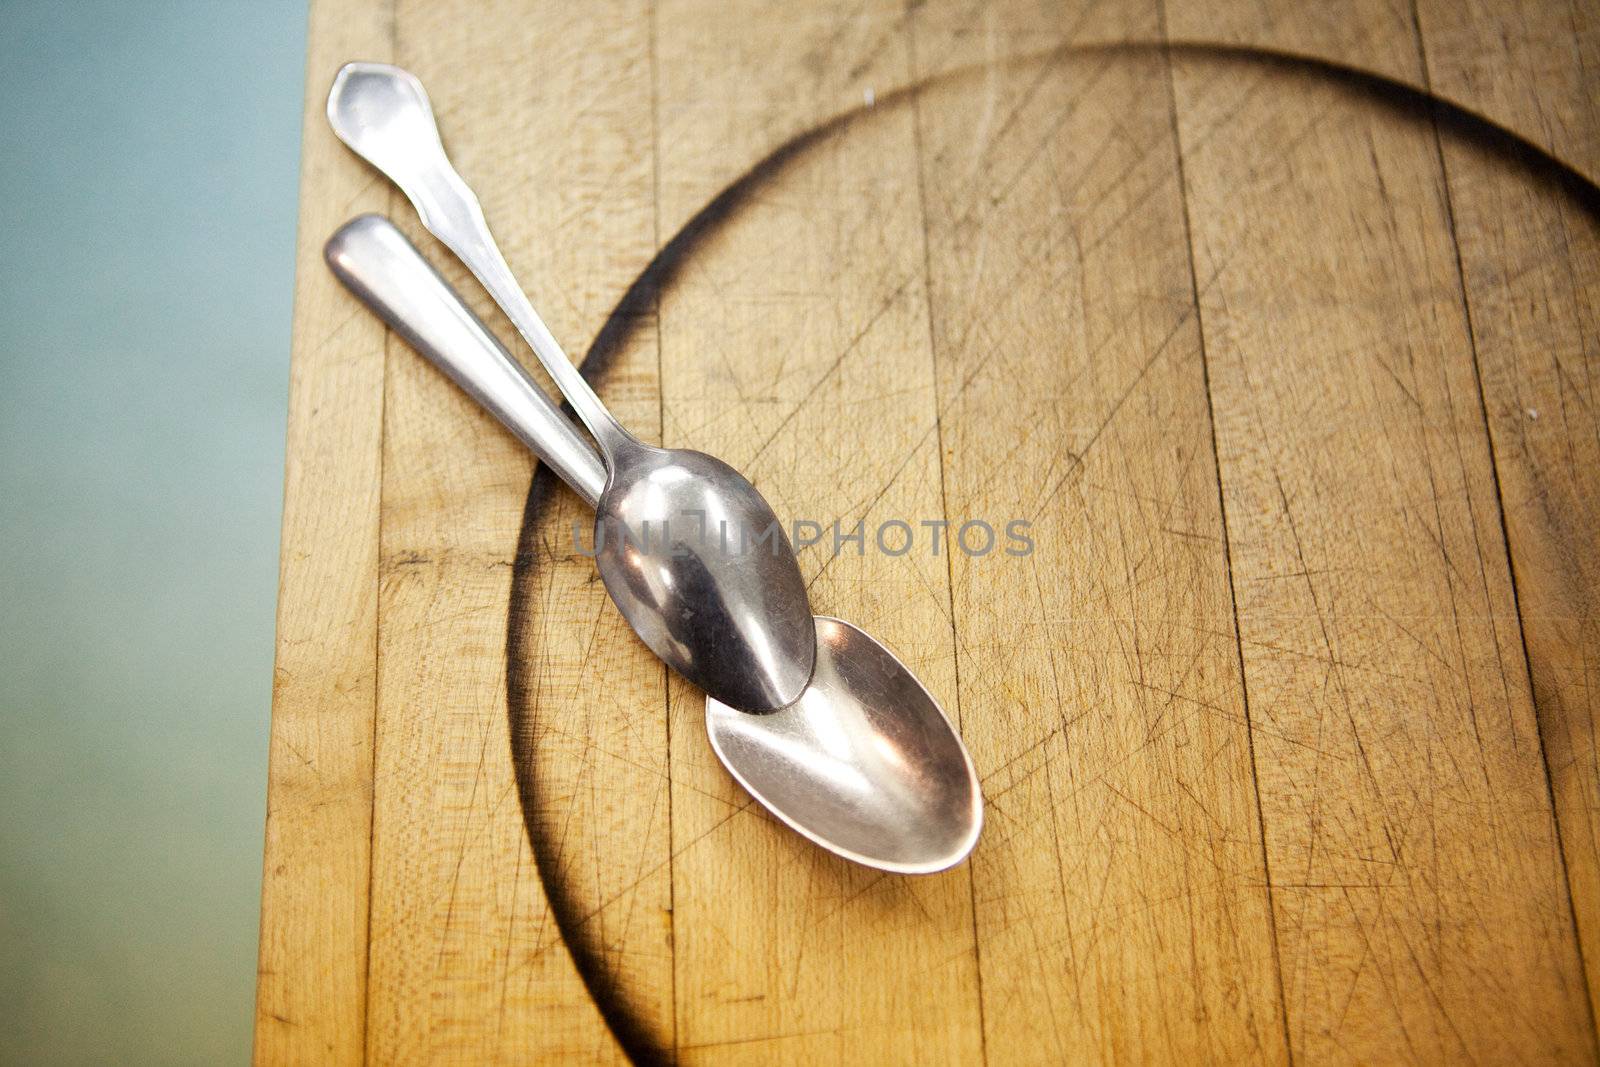 Old Spoon by leaf